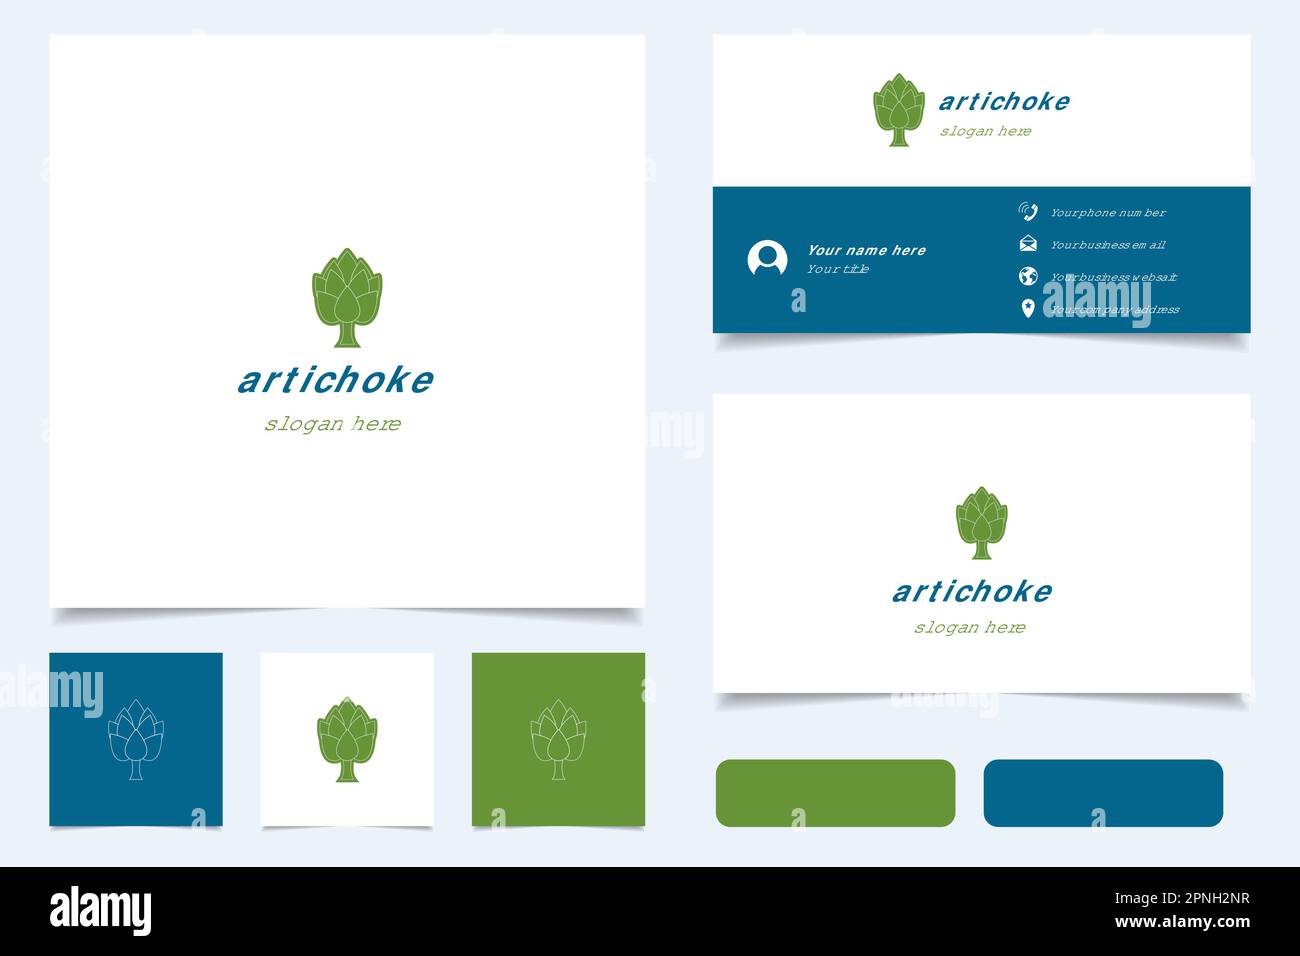 Artichoke logo design with editable slogan. Branding book and business card template. Stock Vector